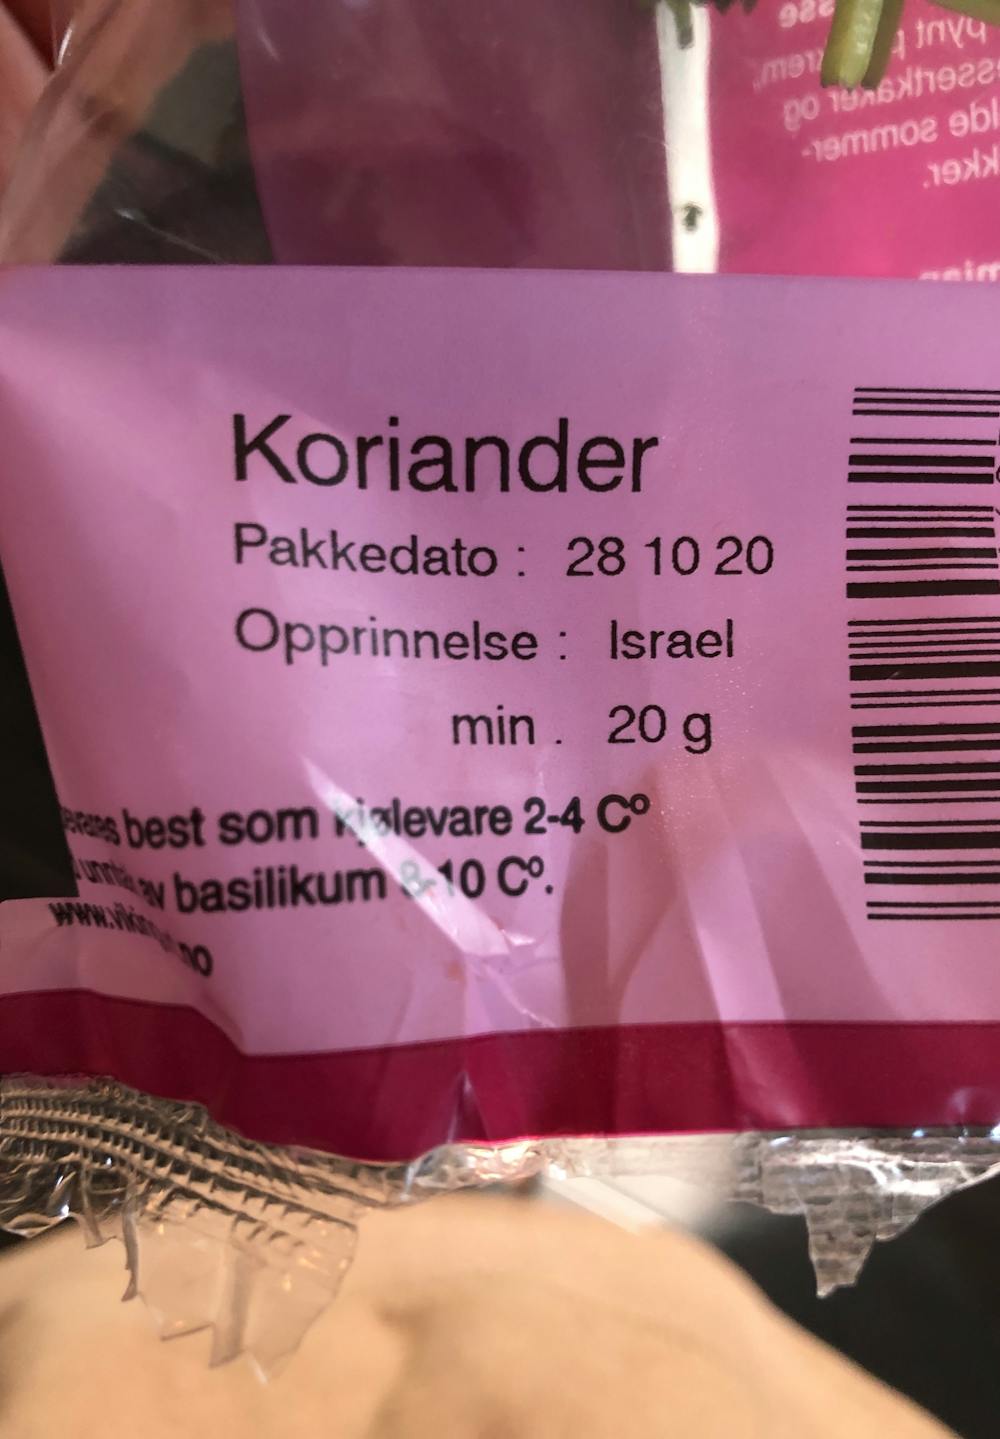 Ingredienslisten til Koriander, Vikingurt